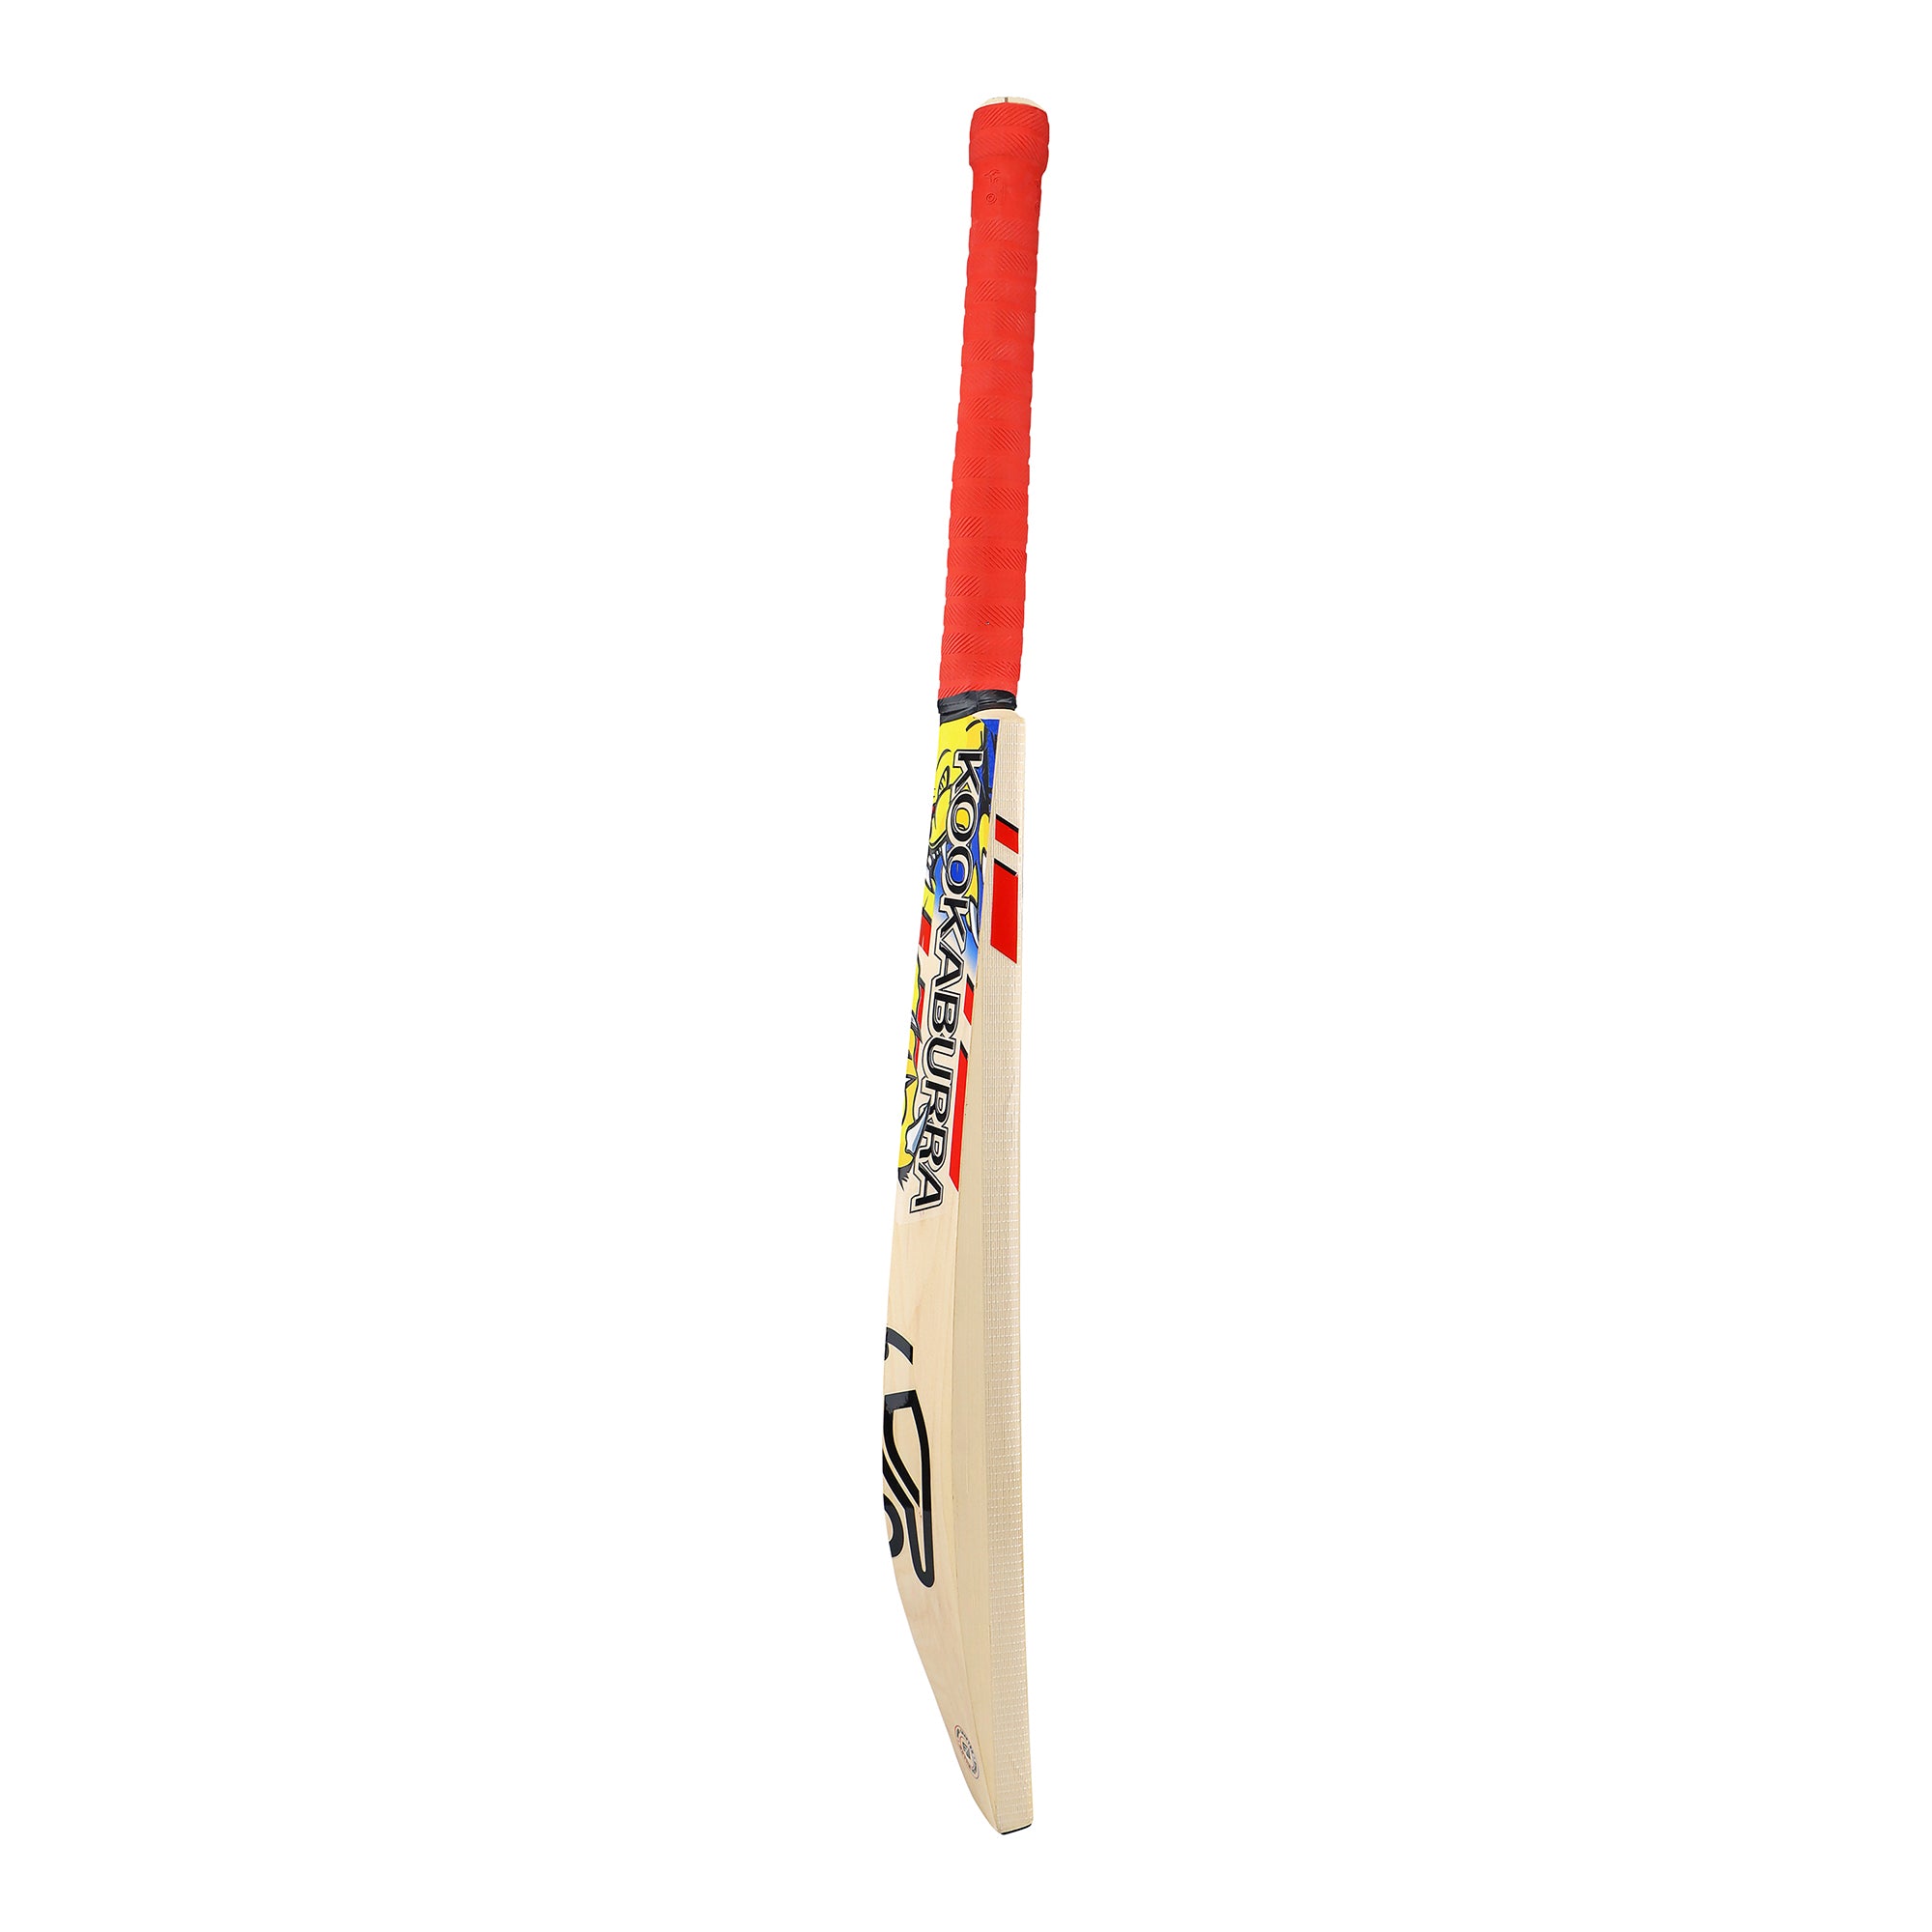 Kookaburra Beast Pro 6.0 Cricket Bat - Senior Long Blade